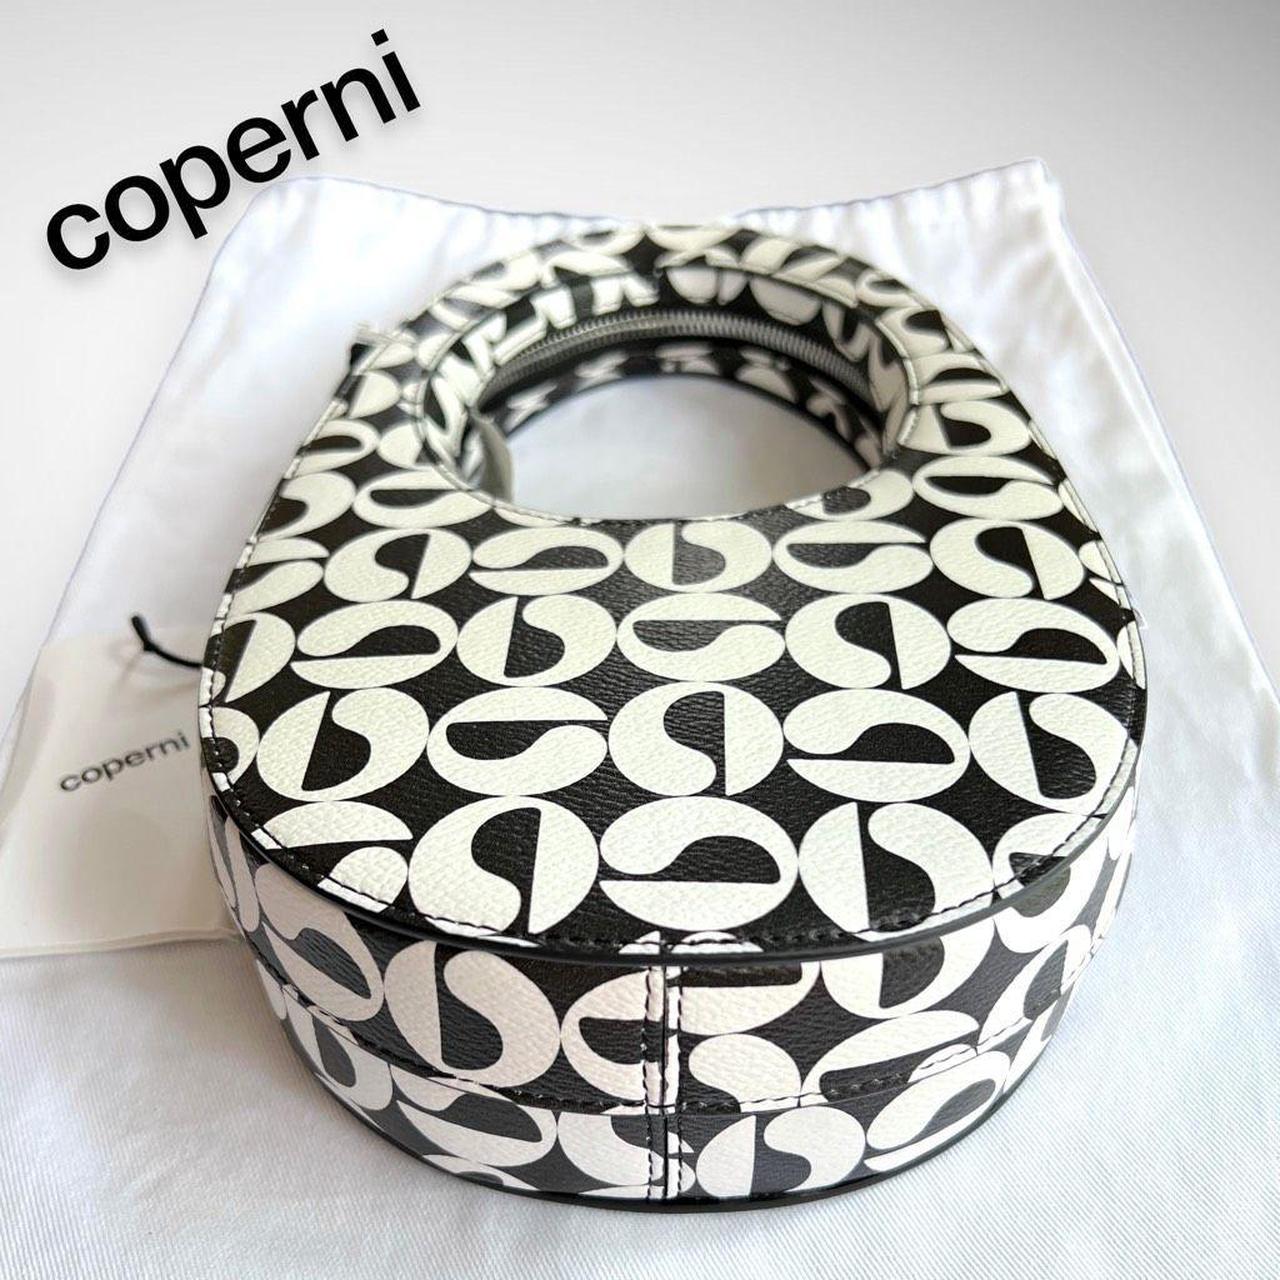 Coperni Women's Black and White Bag (6)